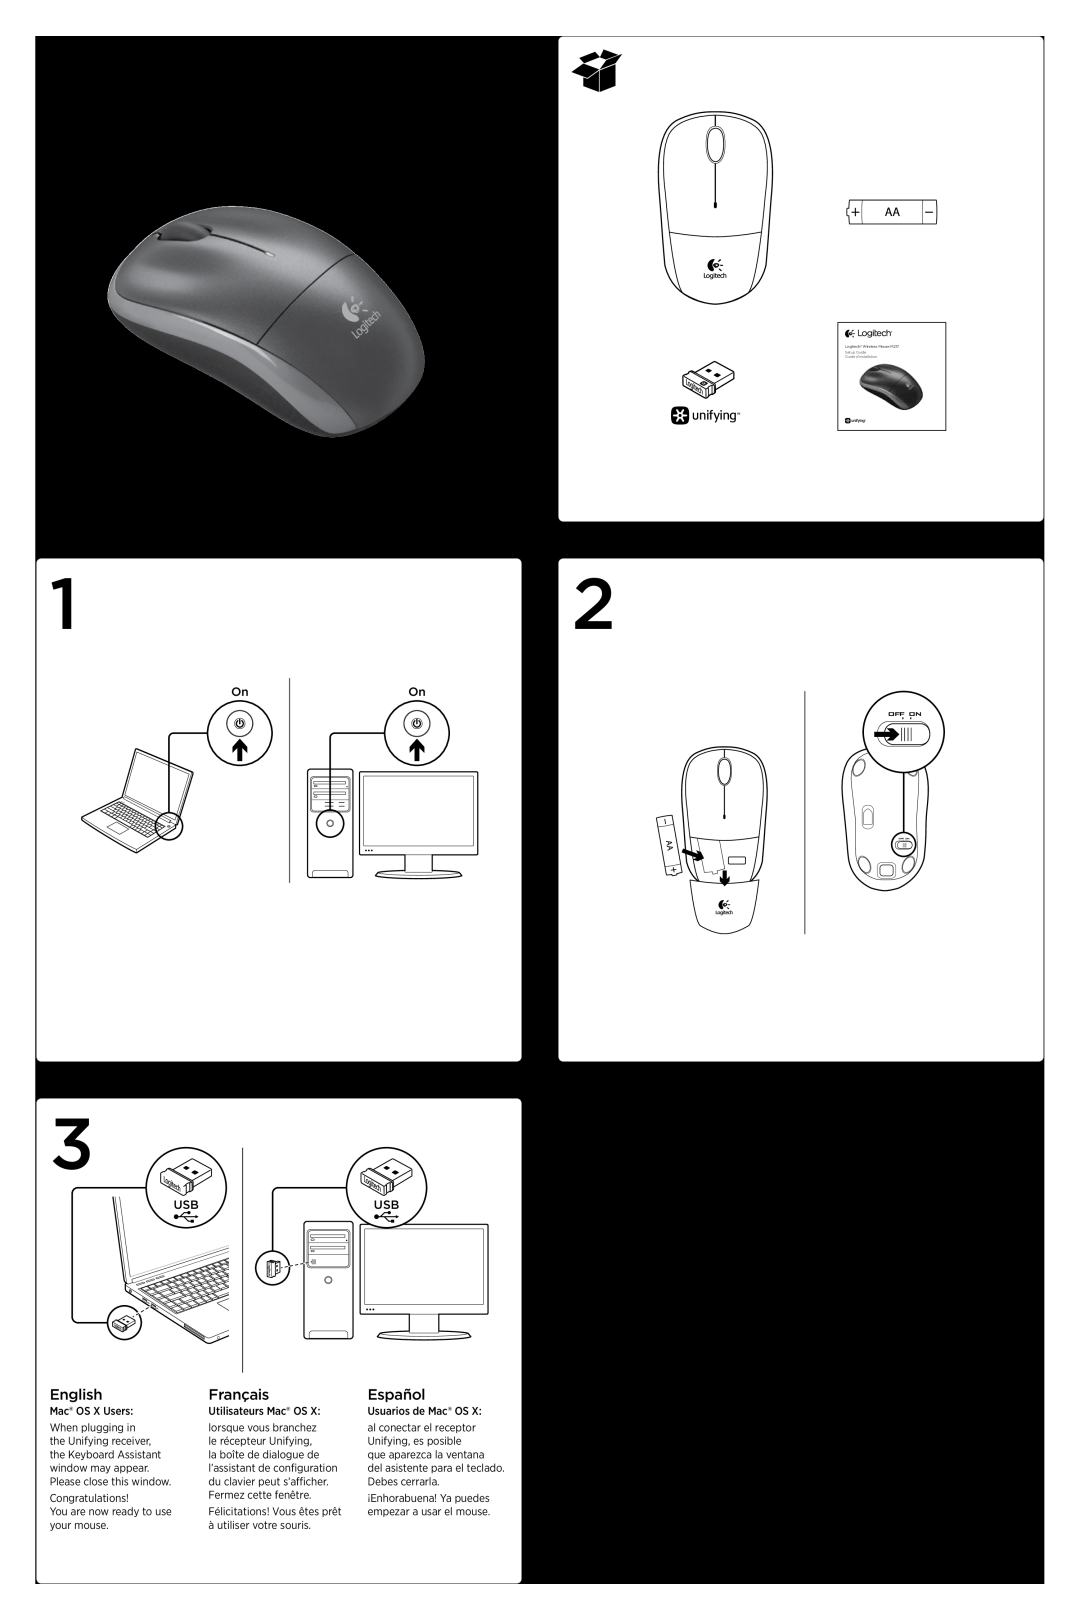 Logitech setup guide Logitech Wireless Mouse M217 Setup Guide Guide d’installation, English, Français, Español 